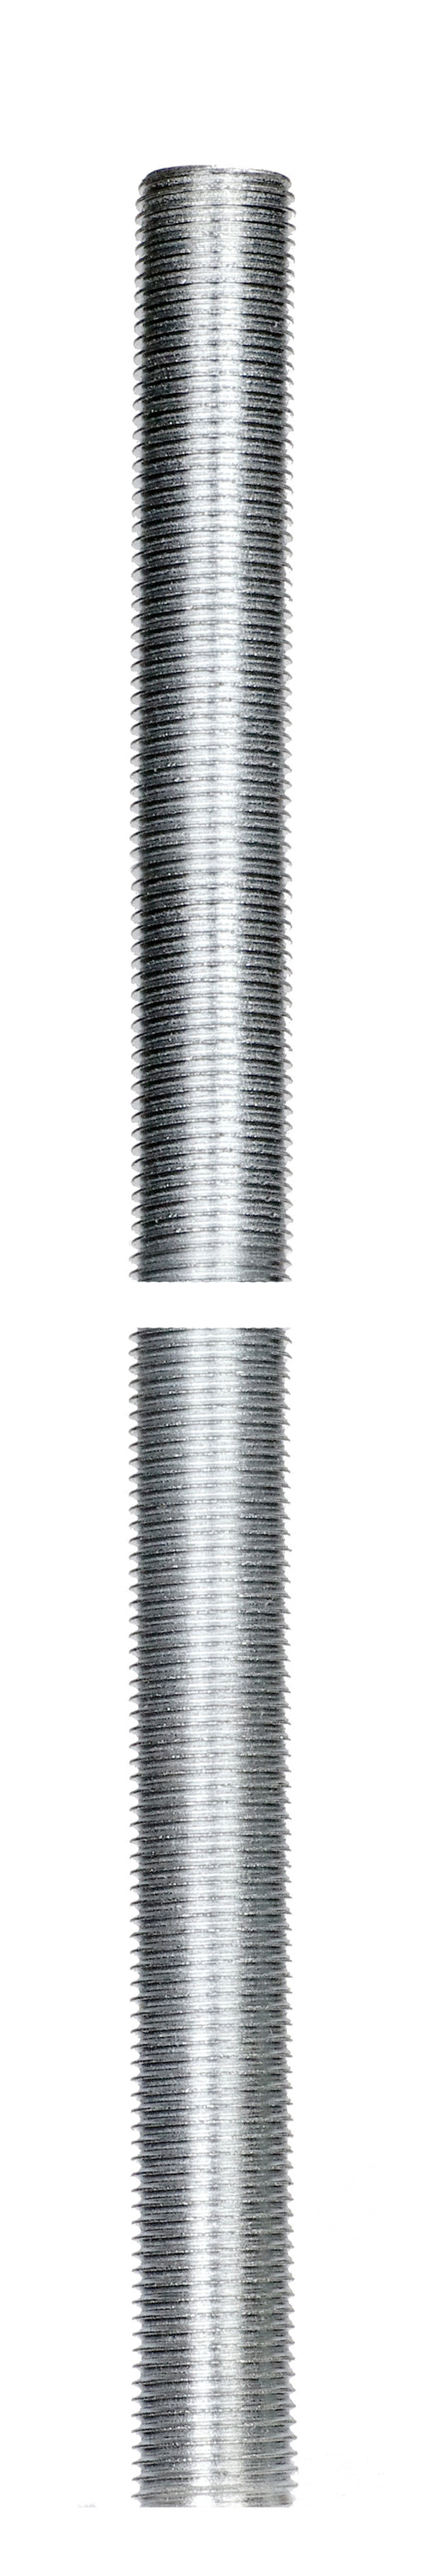 SATCO/NUVO 1/8 IP Steel Nipple Zinc Plated 45 Inch Length 3/8 Inch Wide (90-2108)